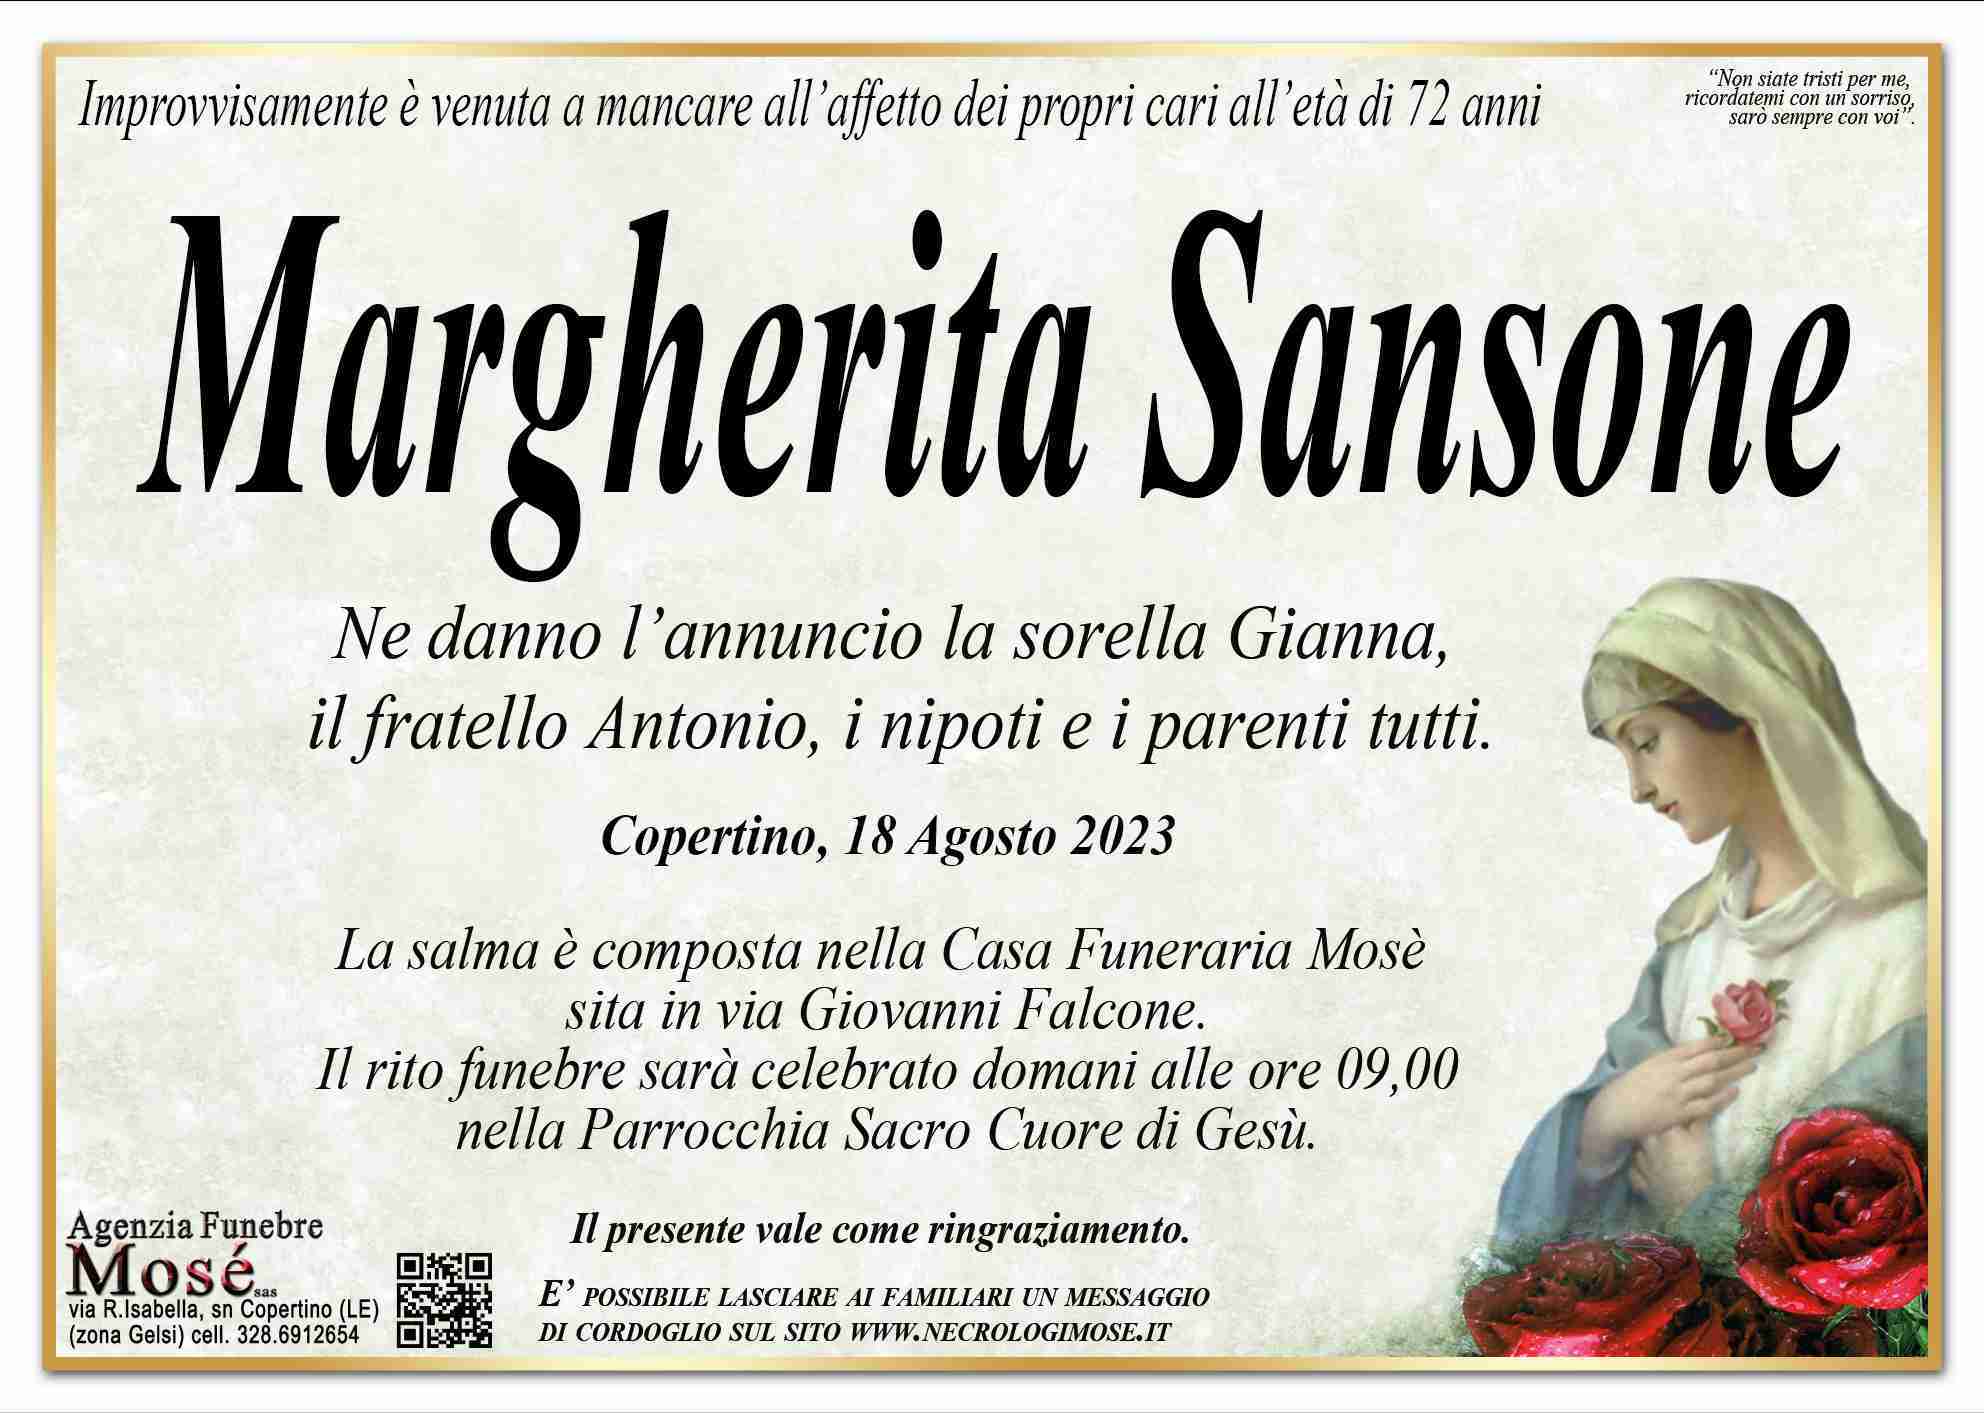 Margherita Sansone